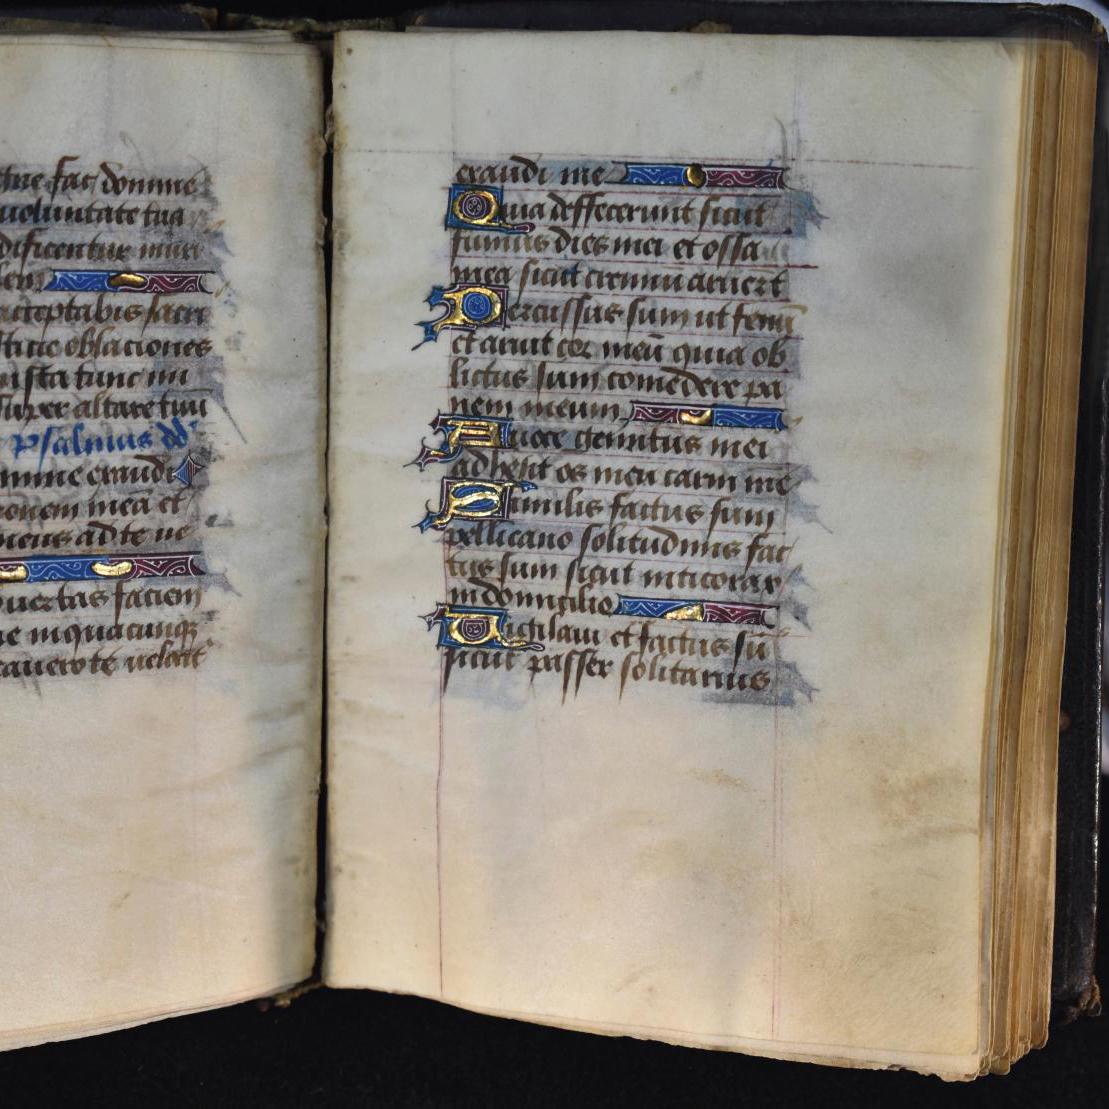 The Final Glory of Illuminated Manuscripts